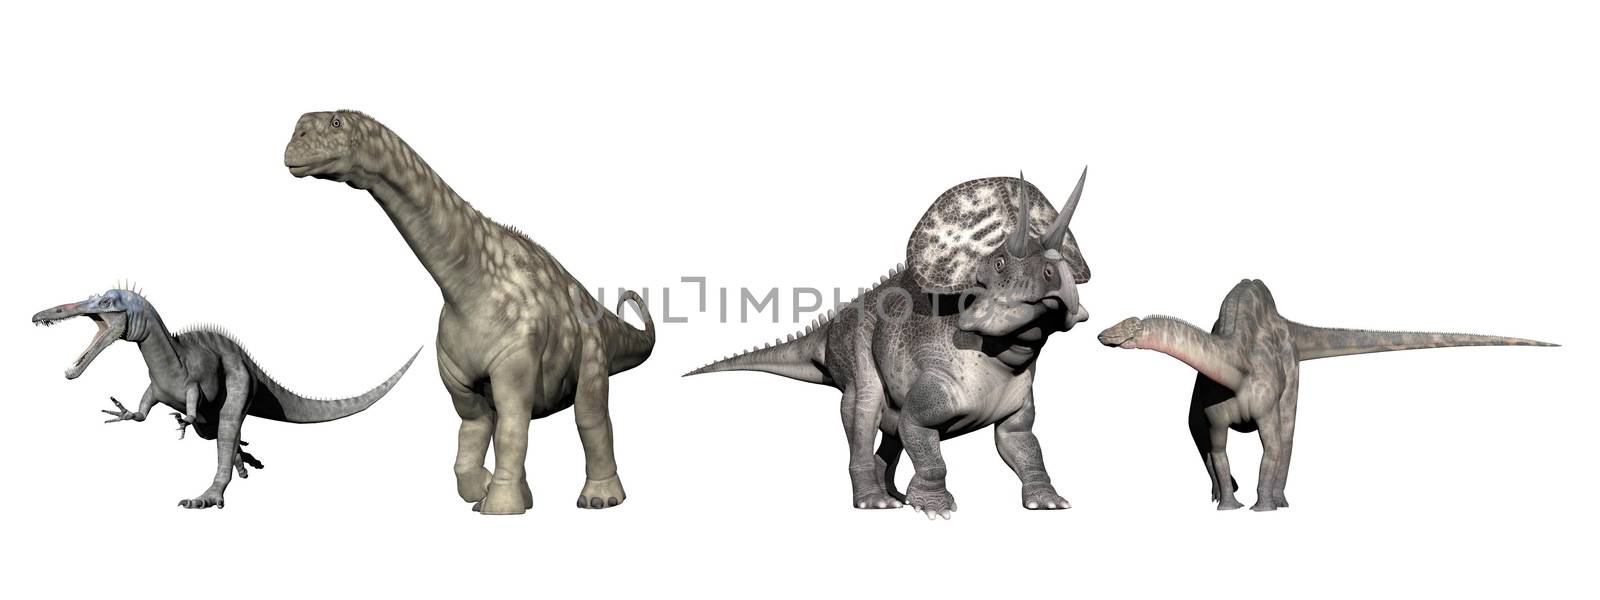 Dinosaurs - 3D render by Elenaphotos21